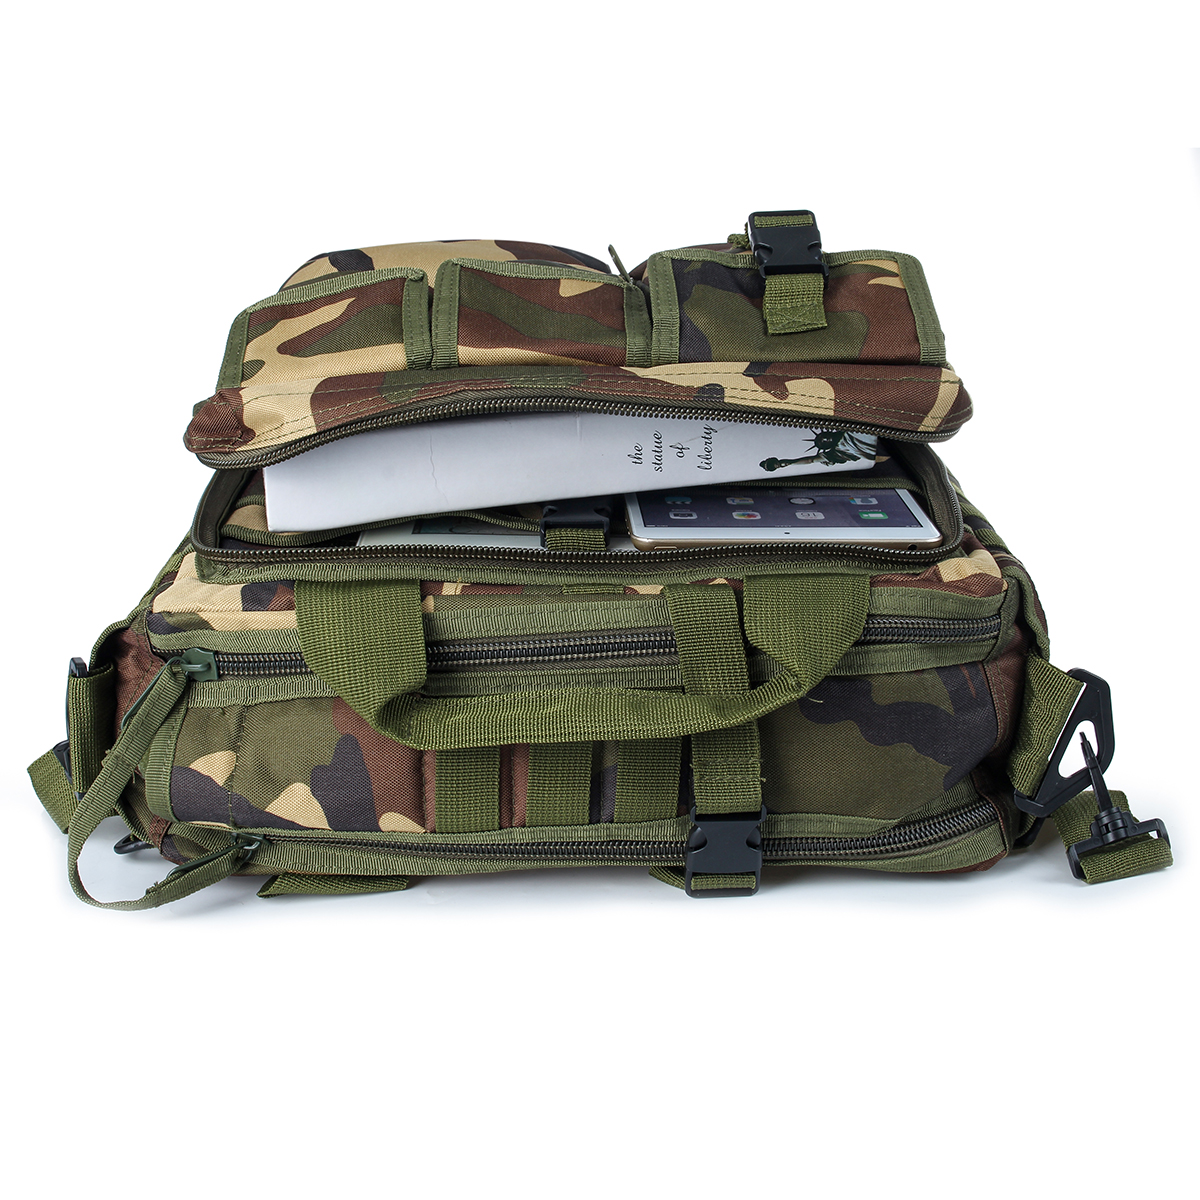 Military Bag Computer Camera Bag Slung Shoulder Bag Tactical Backpack